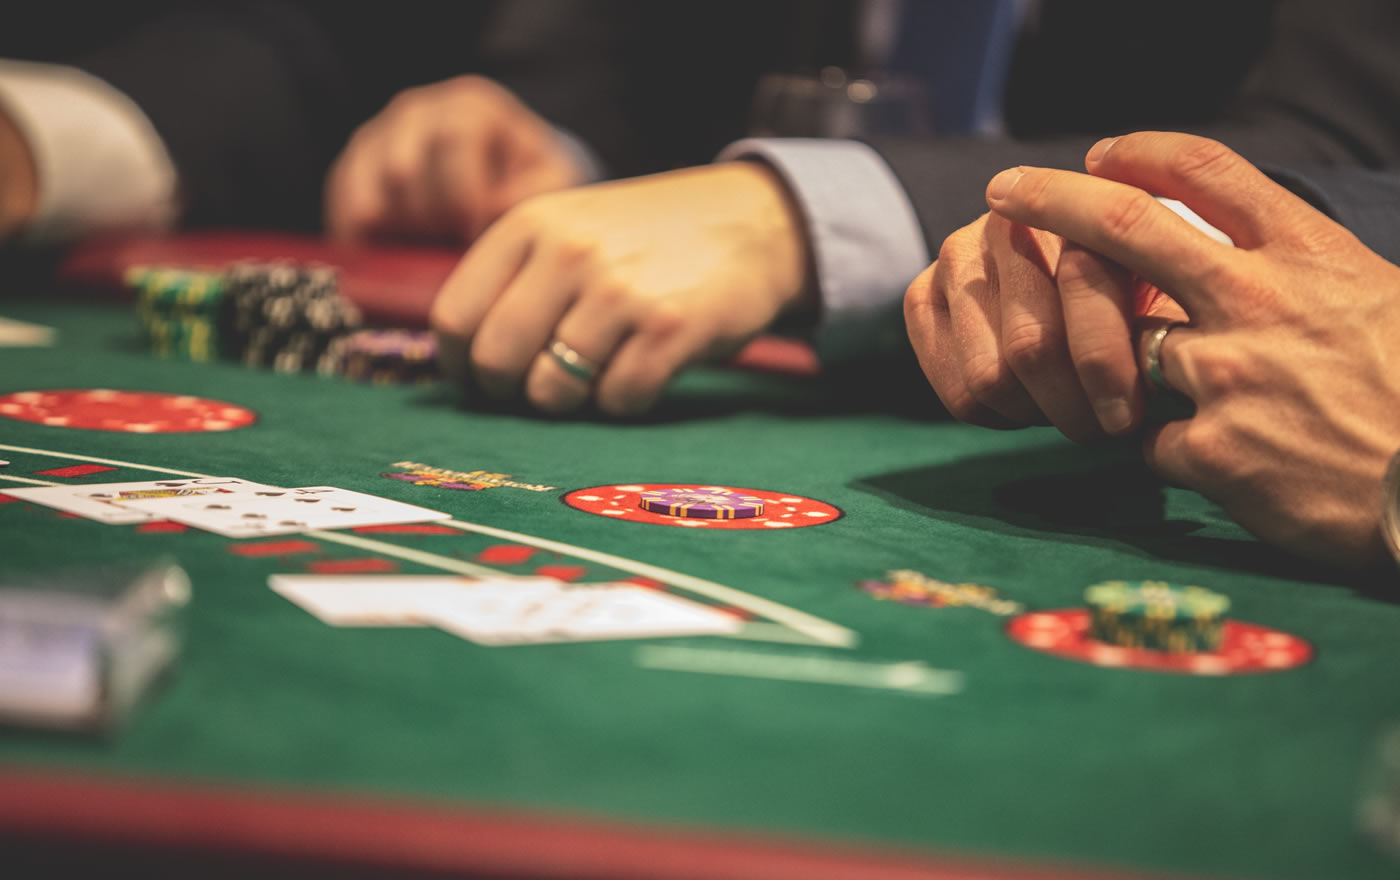 Gambling in Casinos